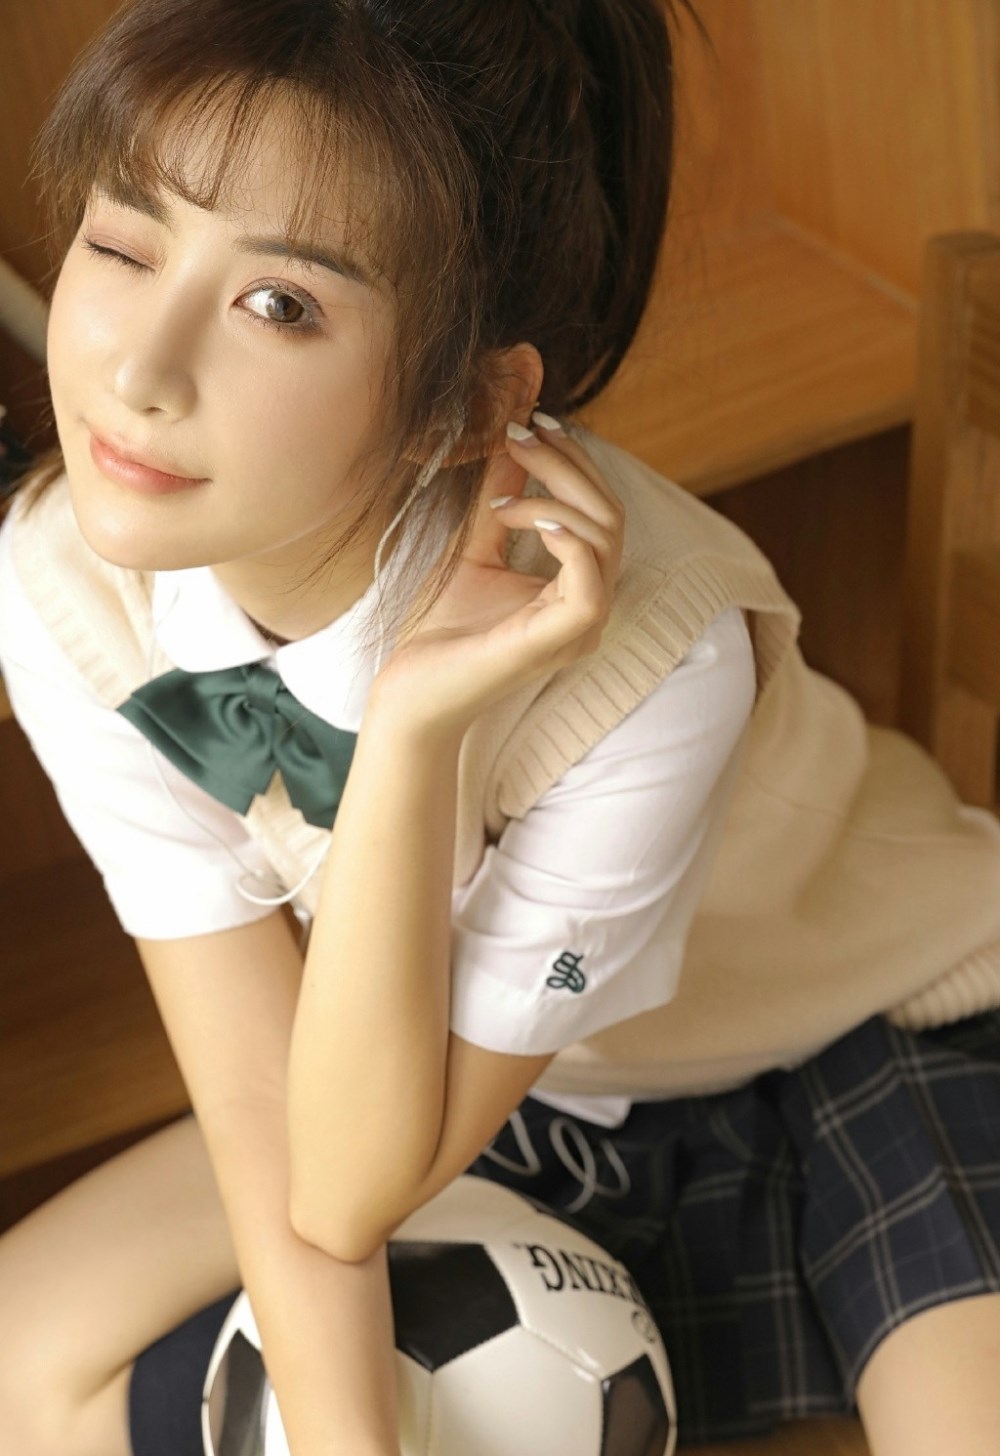 Japanese campus goddess sports beauty short skirt uniform student younger sister sexy temptation sentimental photo(2)